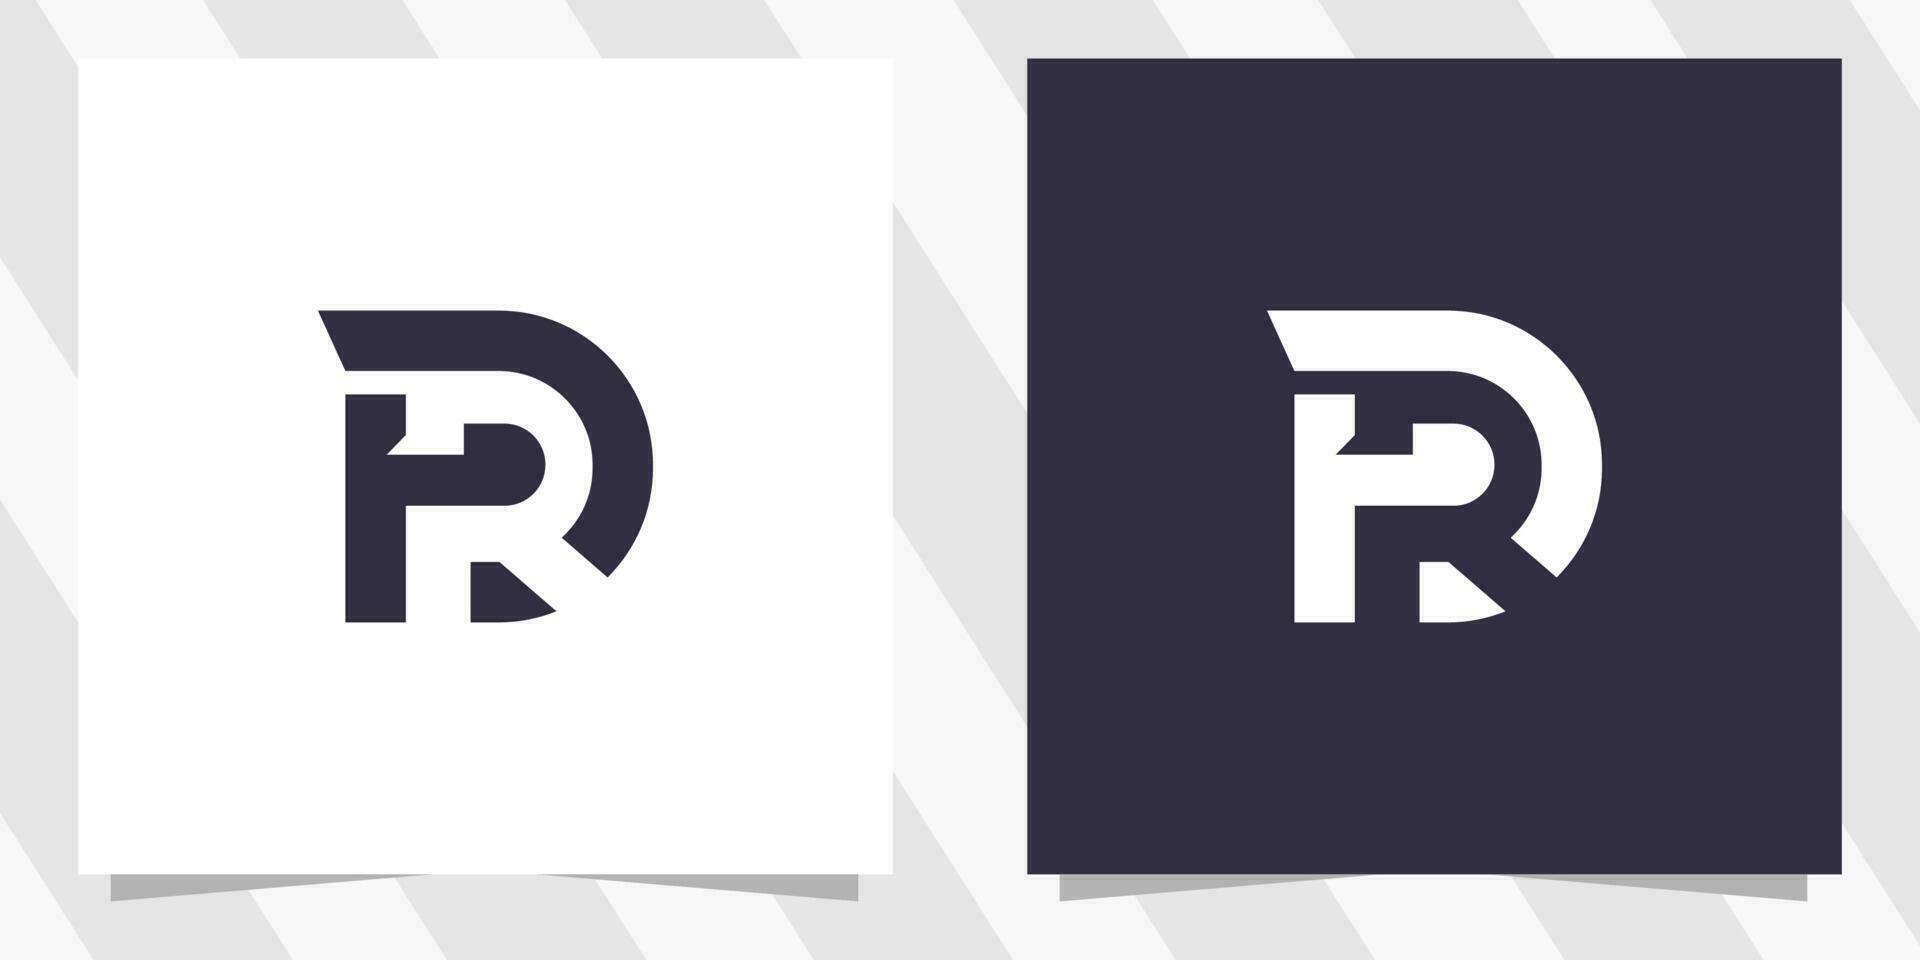 brief pr rp logo ontwerp vector